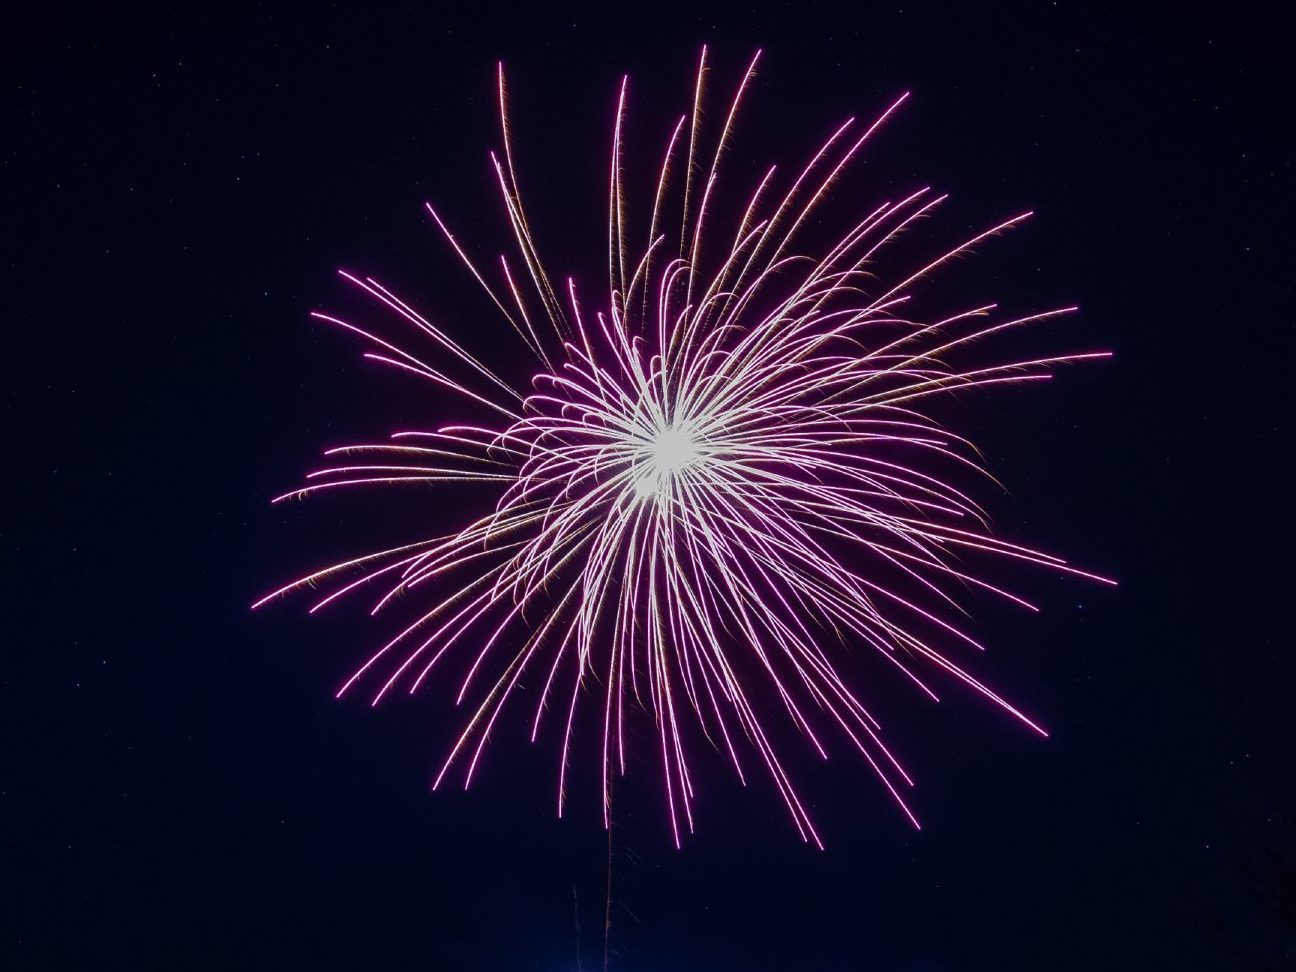 Portgordon Fireworks